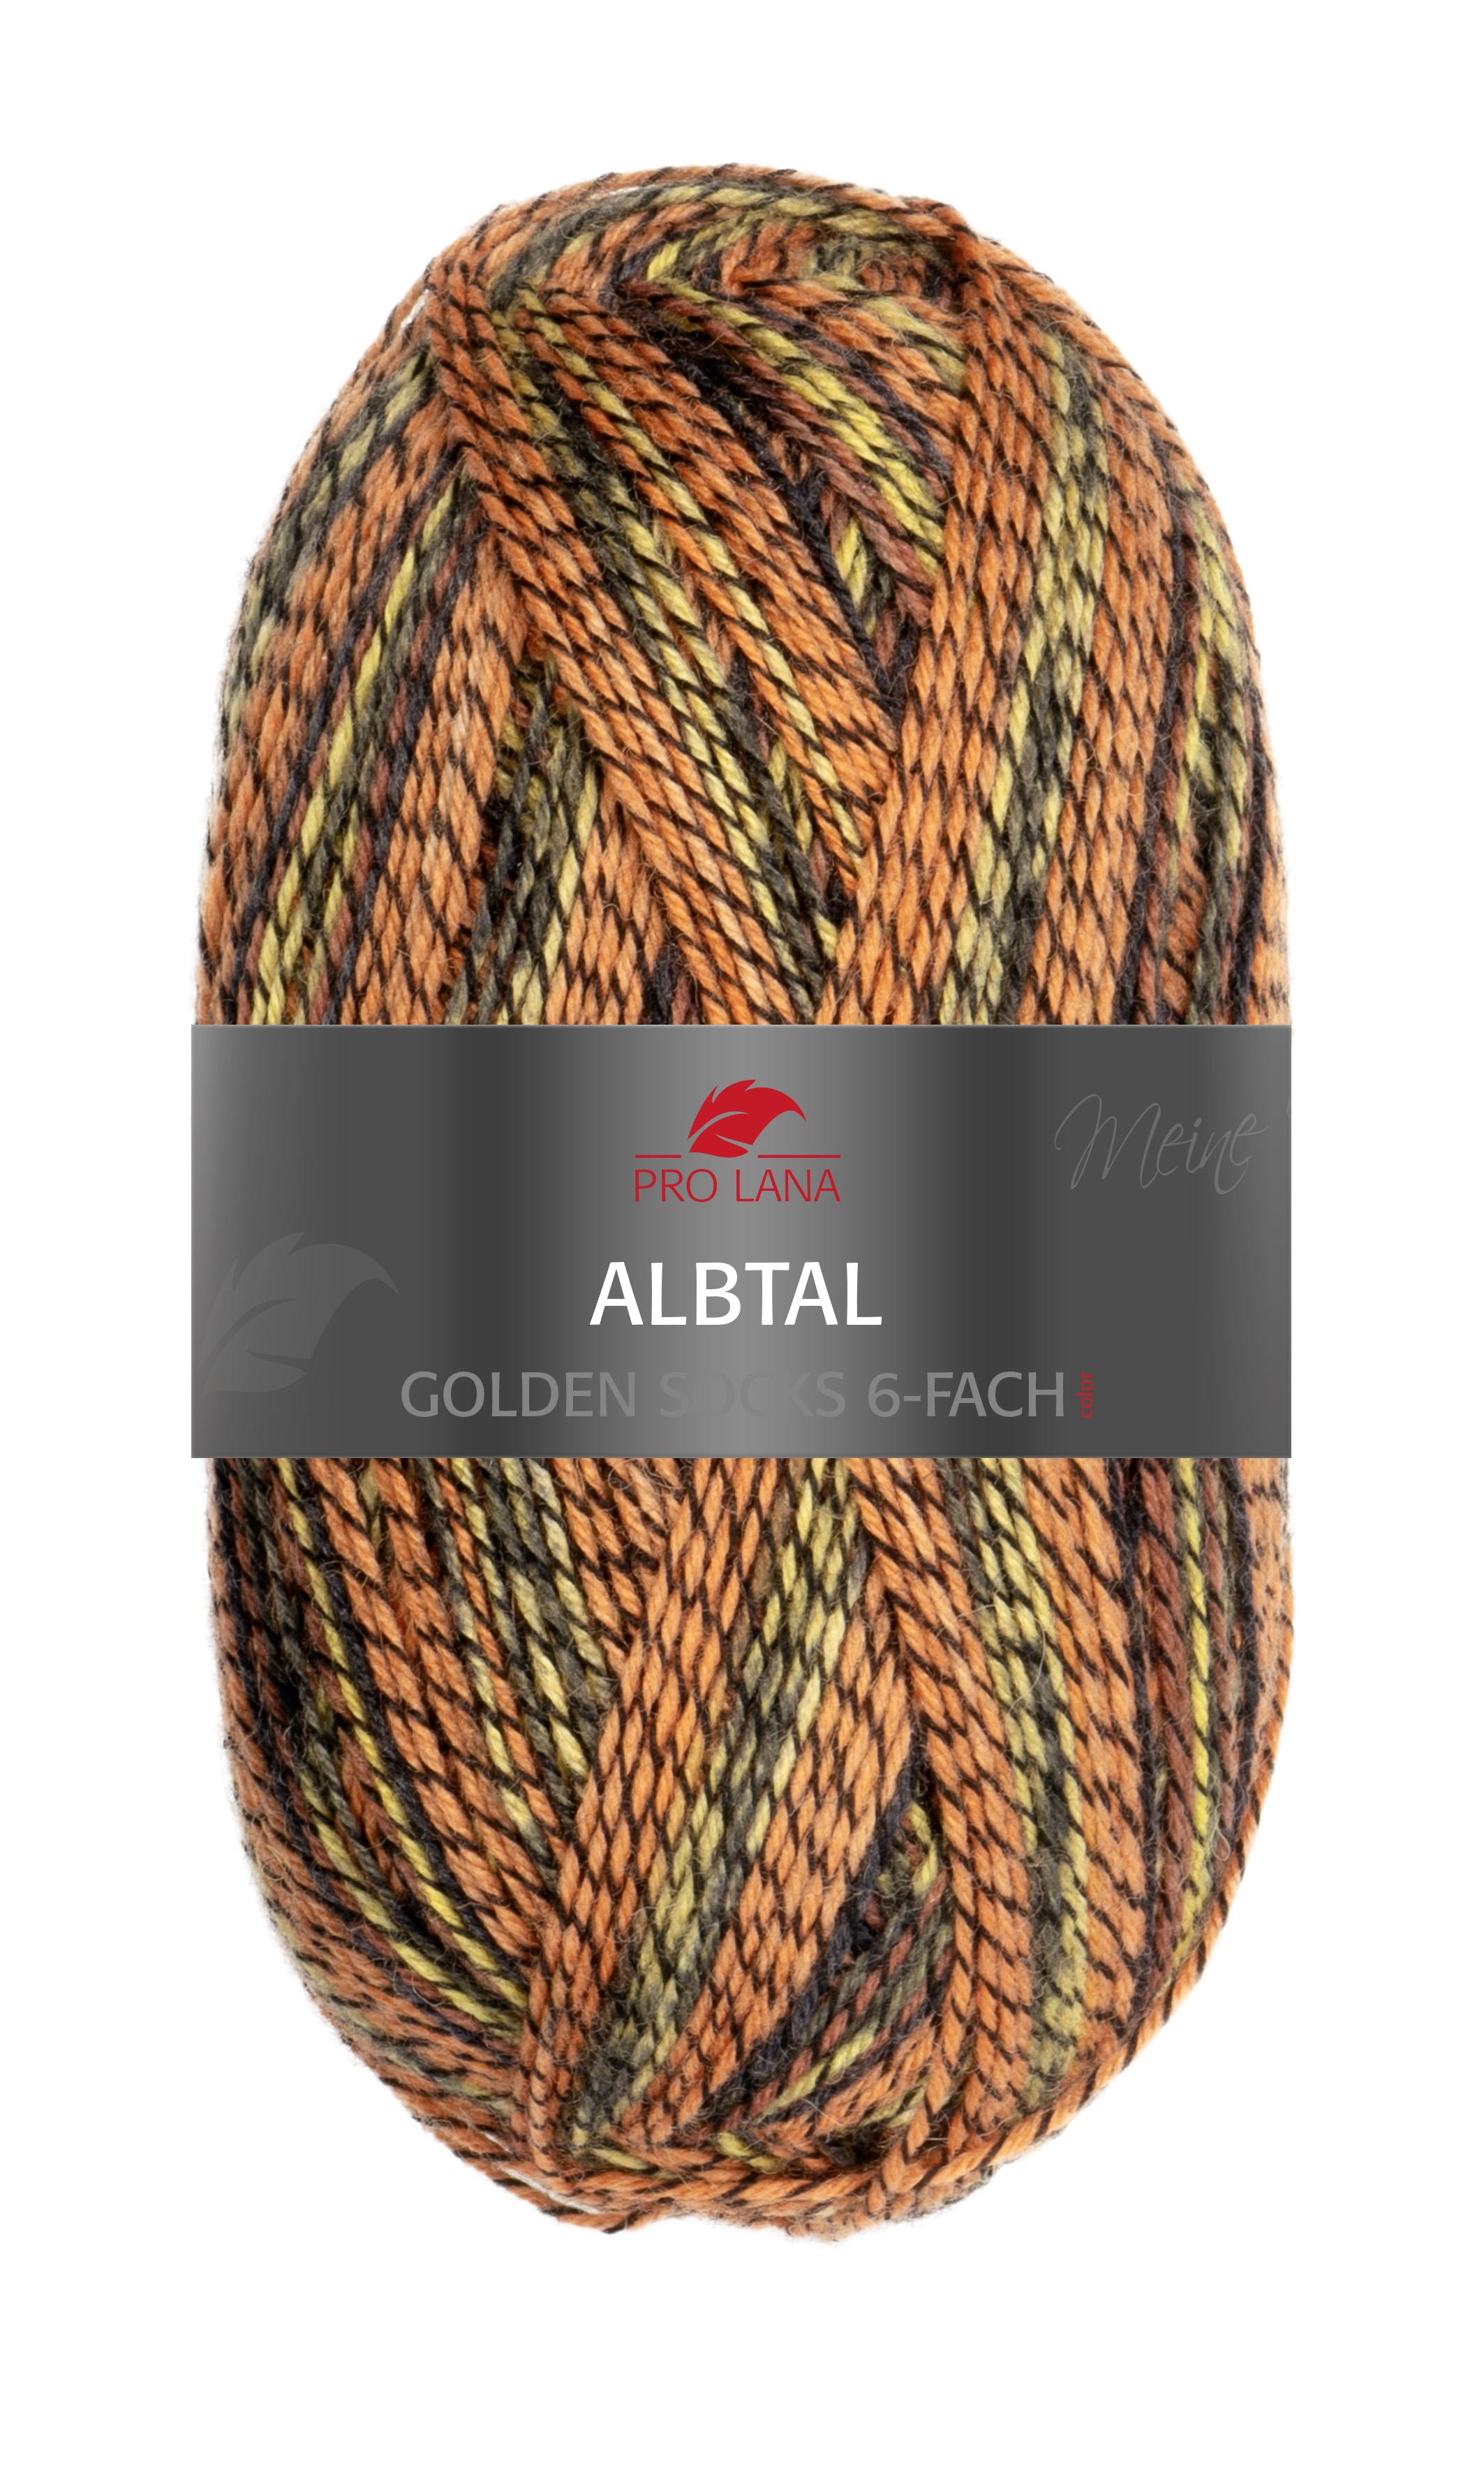 ALBTAL Golden Socks 6-fach color